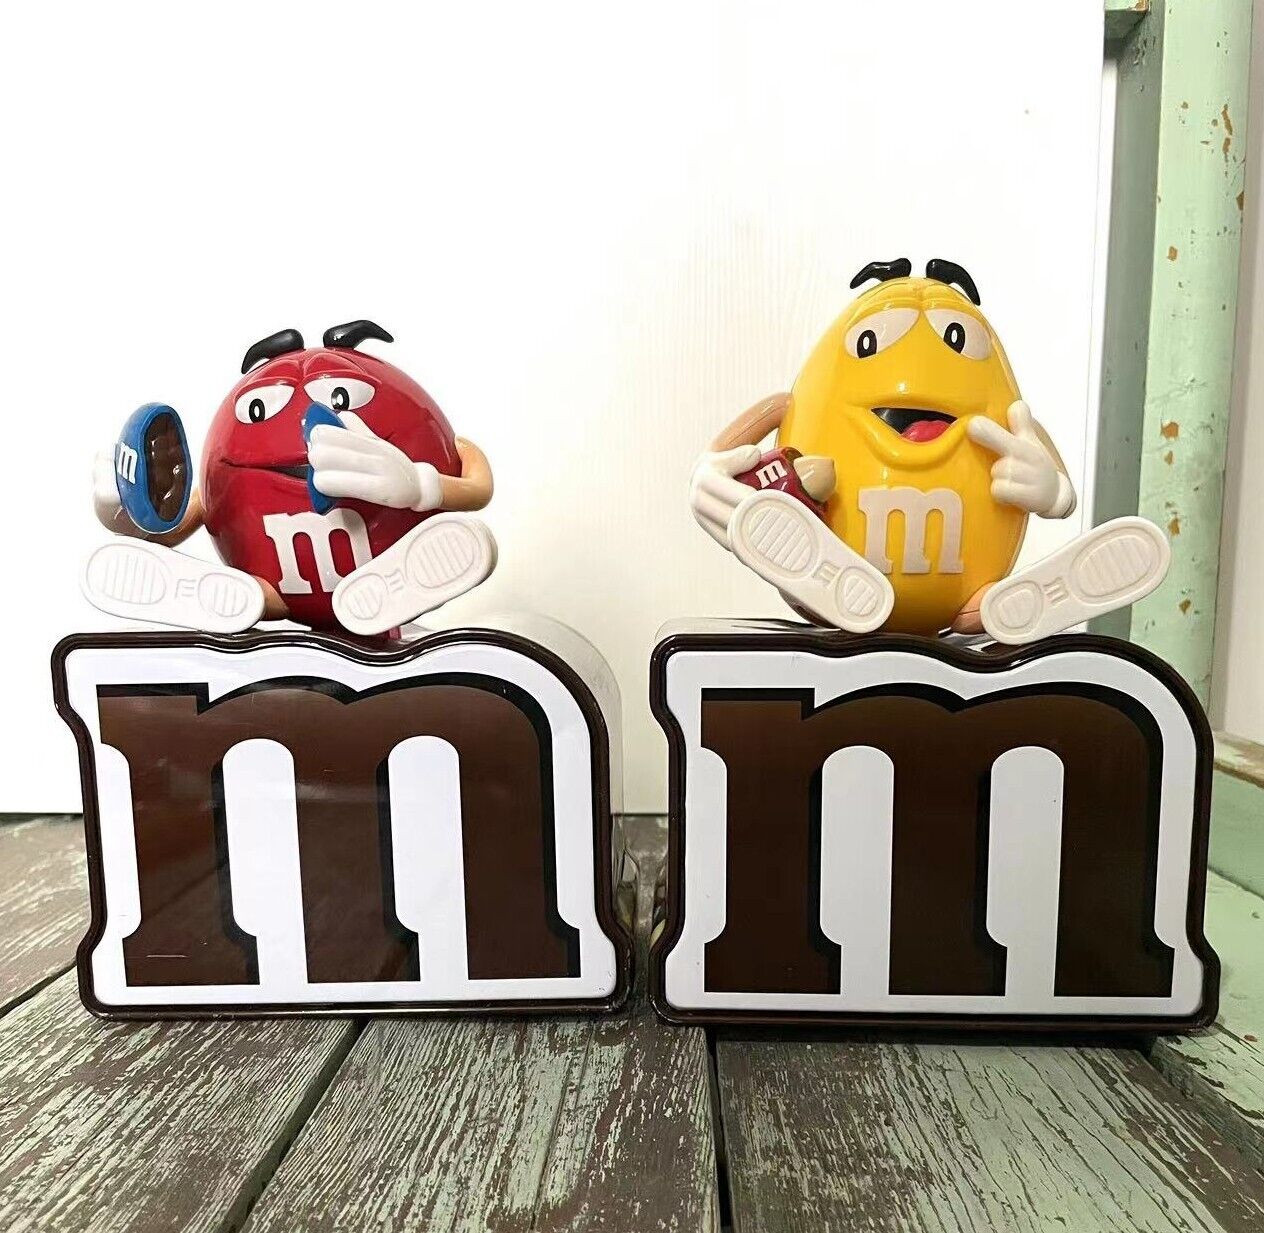 M&M 2014 Chocolate Bean candy box